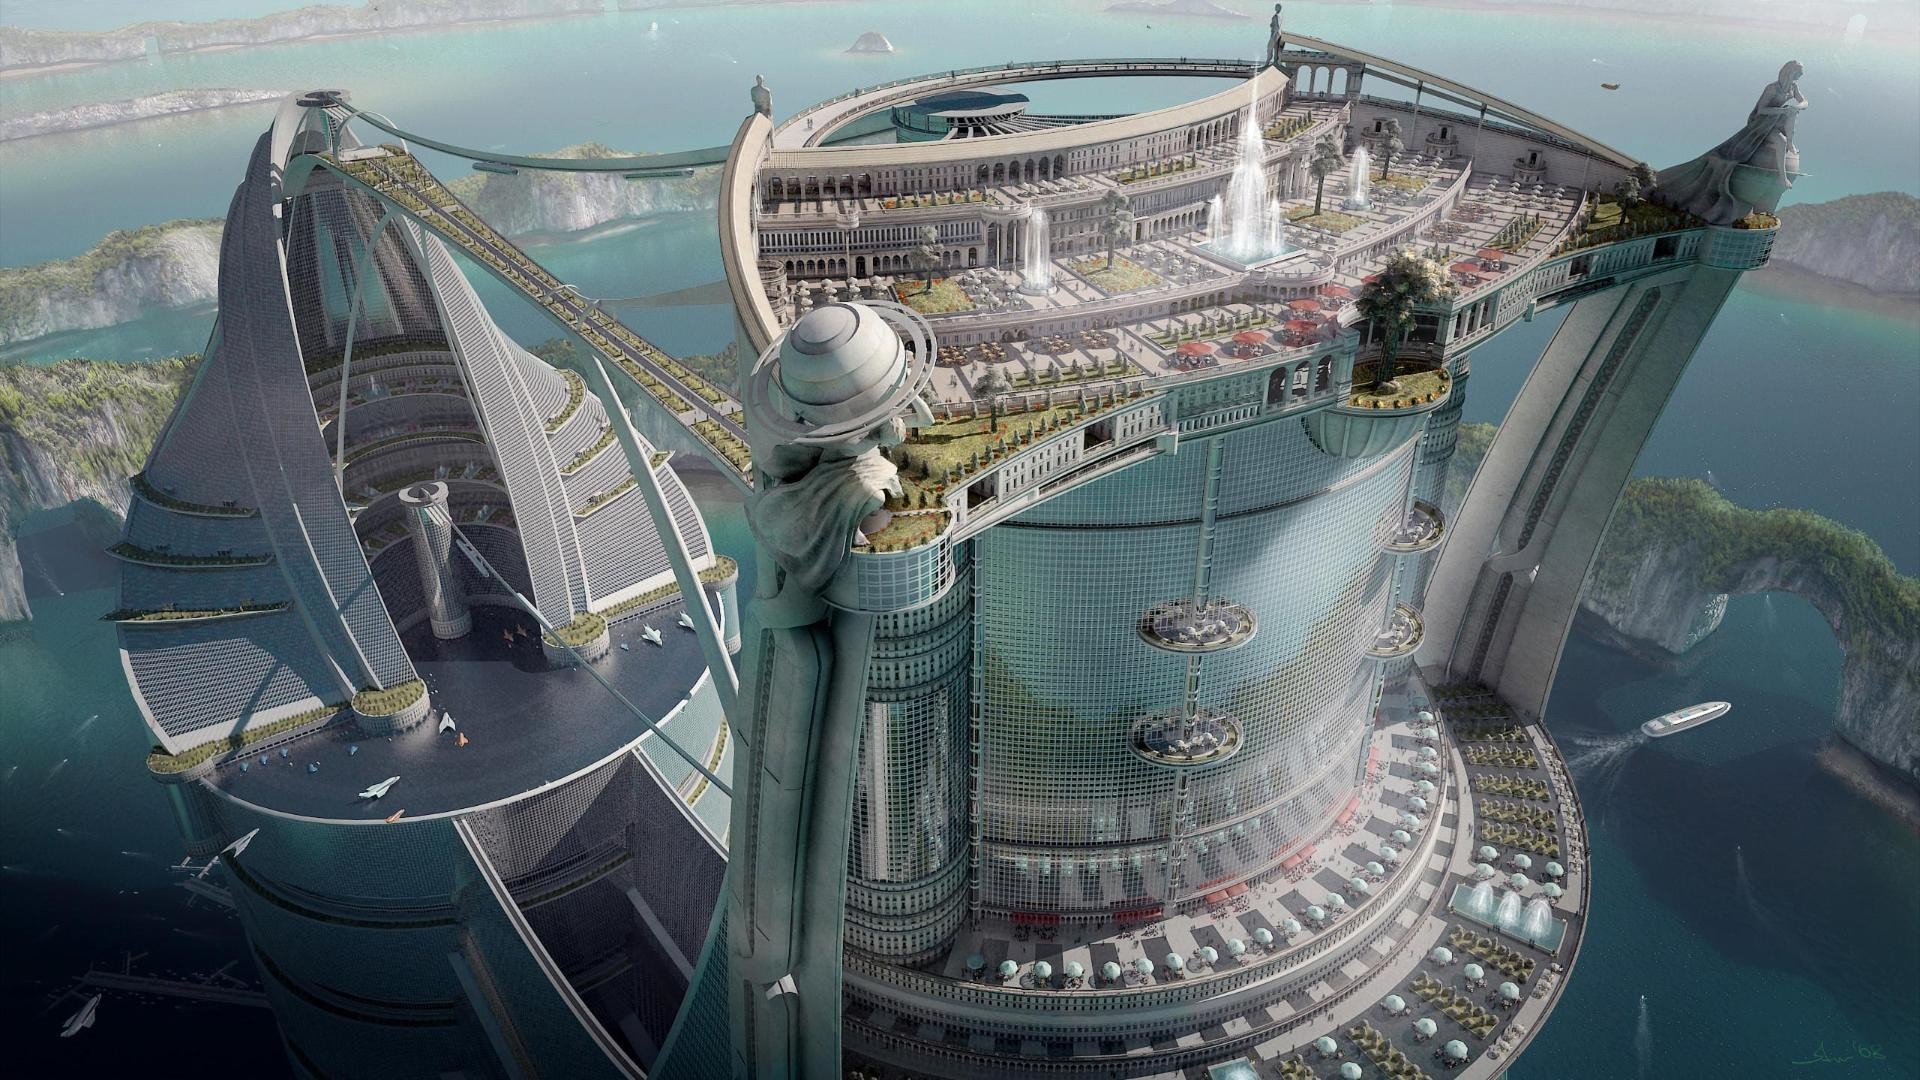 General 1920x1080 futuristic architecture landscape futuristic city digital art science fiction CGI artwork